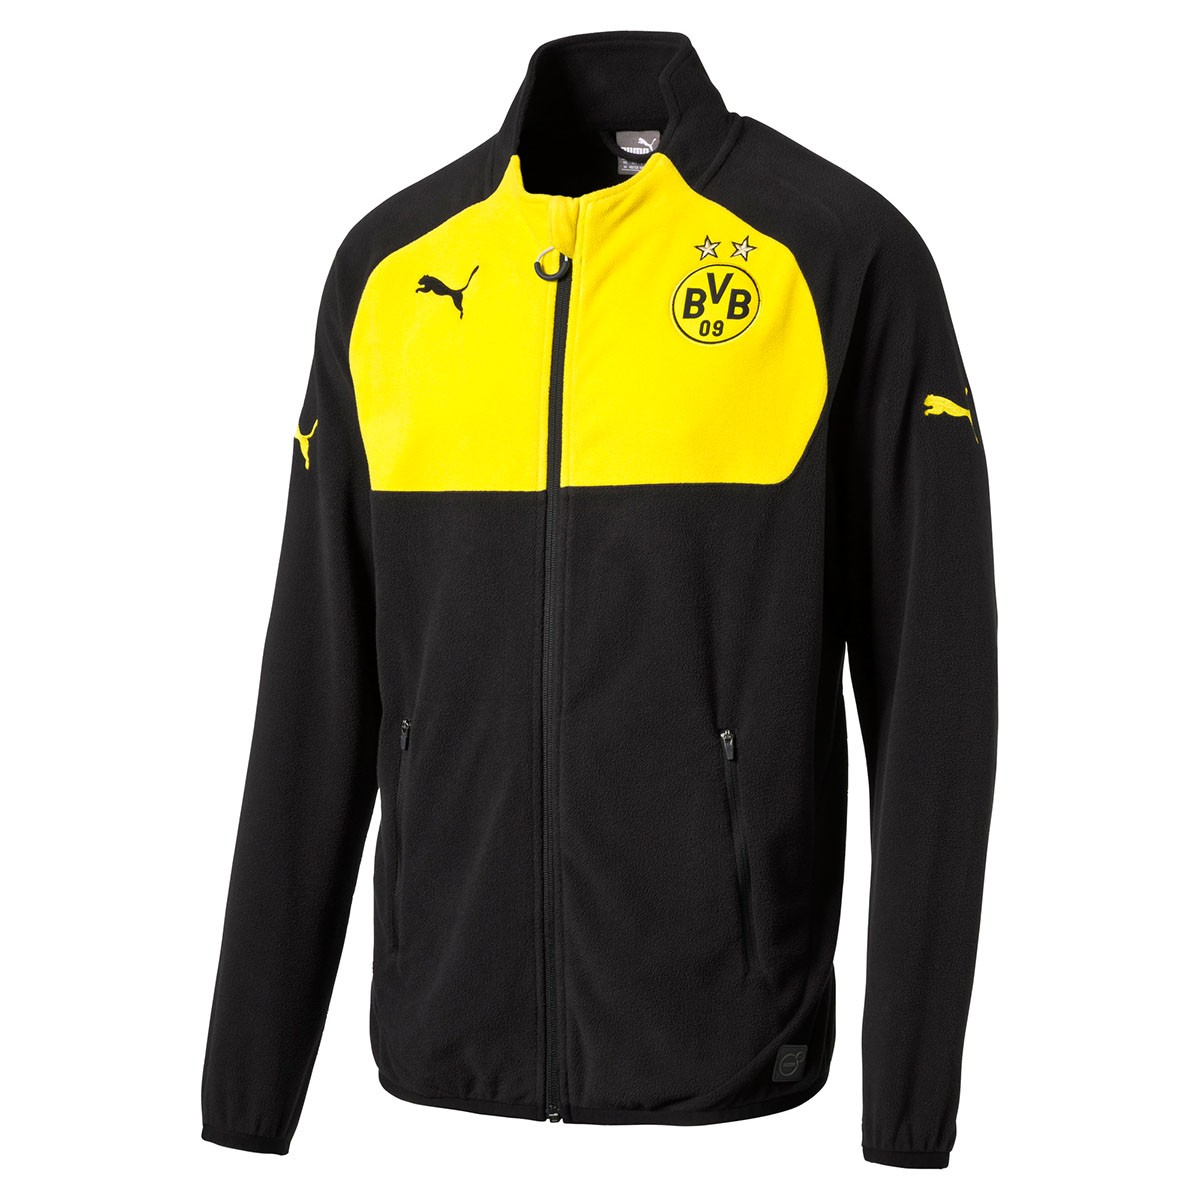 Puma BVB Full Zip Fleece Jacke Herren Sportjacke sweatshirt zipper